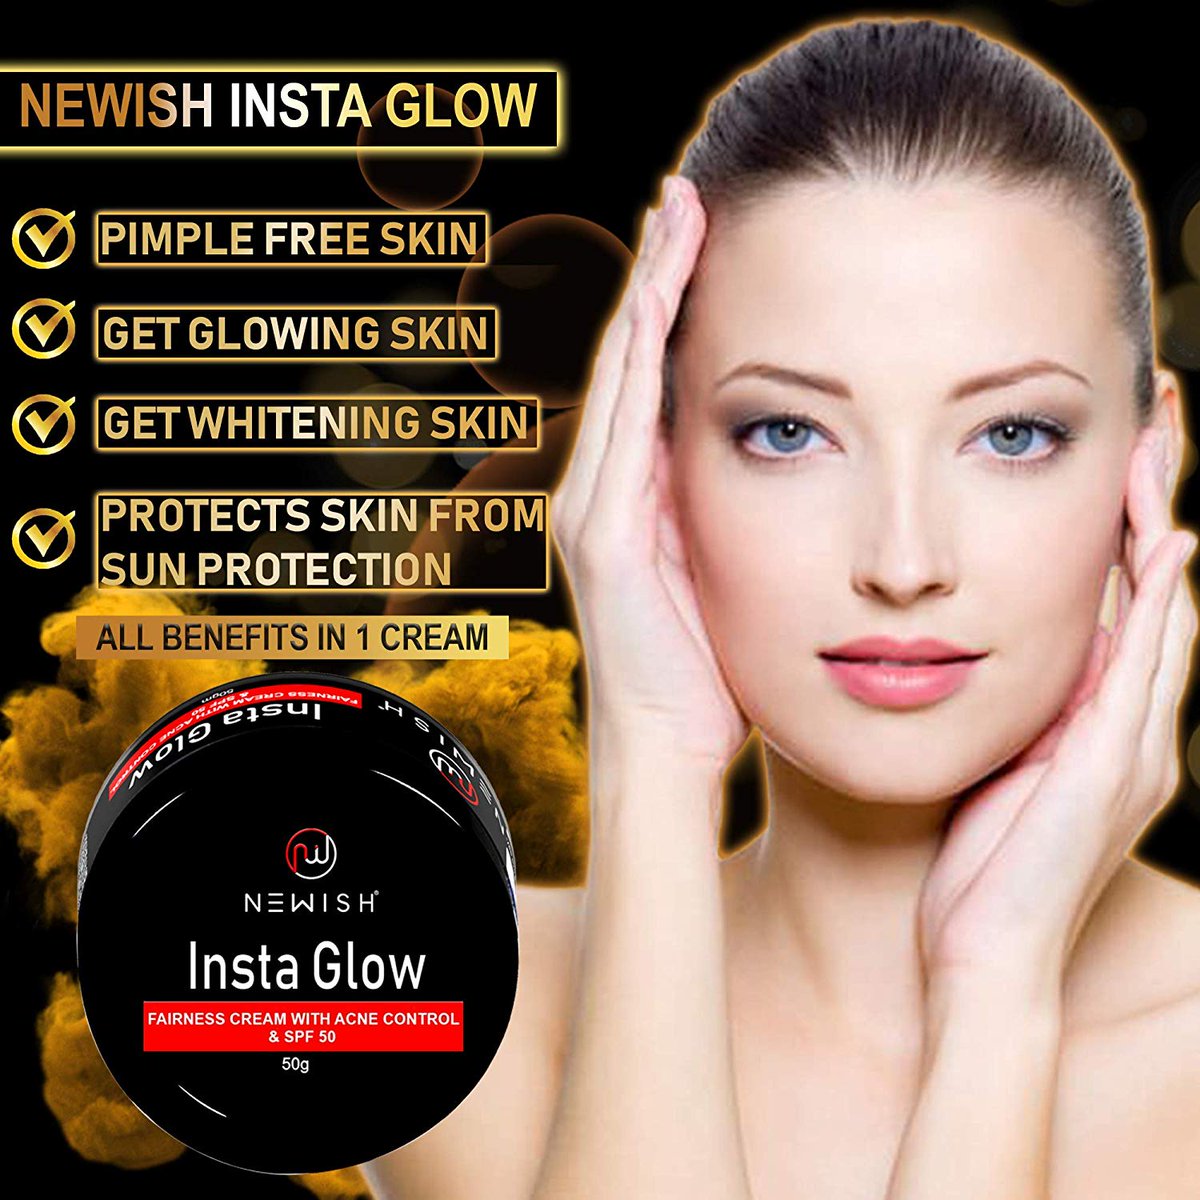 𝗡𝗲𝘄𝗶𝘀𝗵 𝗜𝗻𝘀𝘁𝗮 𝗚𝗹𝗼𝘄 𝗙𝗮𝗶𝗿𝗻𝗲𝘀𝘀 𝗖𝗿𝗲𝗮𝗺 𝗳𝗼𝗿 𝗙𝗮𝗰𝗲 . 

Buy Now : amzn.to/307eSjC

#instaglow #clearskin #instaglowskin #newish #beautiful #beauty  #skincare #skincaretips #makeup #darkskin #facecare #glow #like #natural #glowing #faceproducts